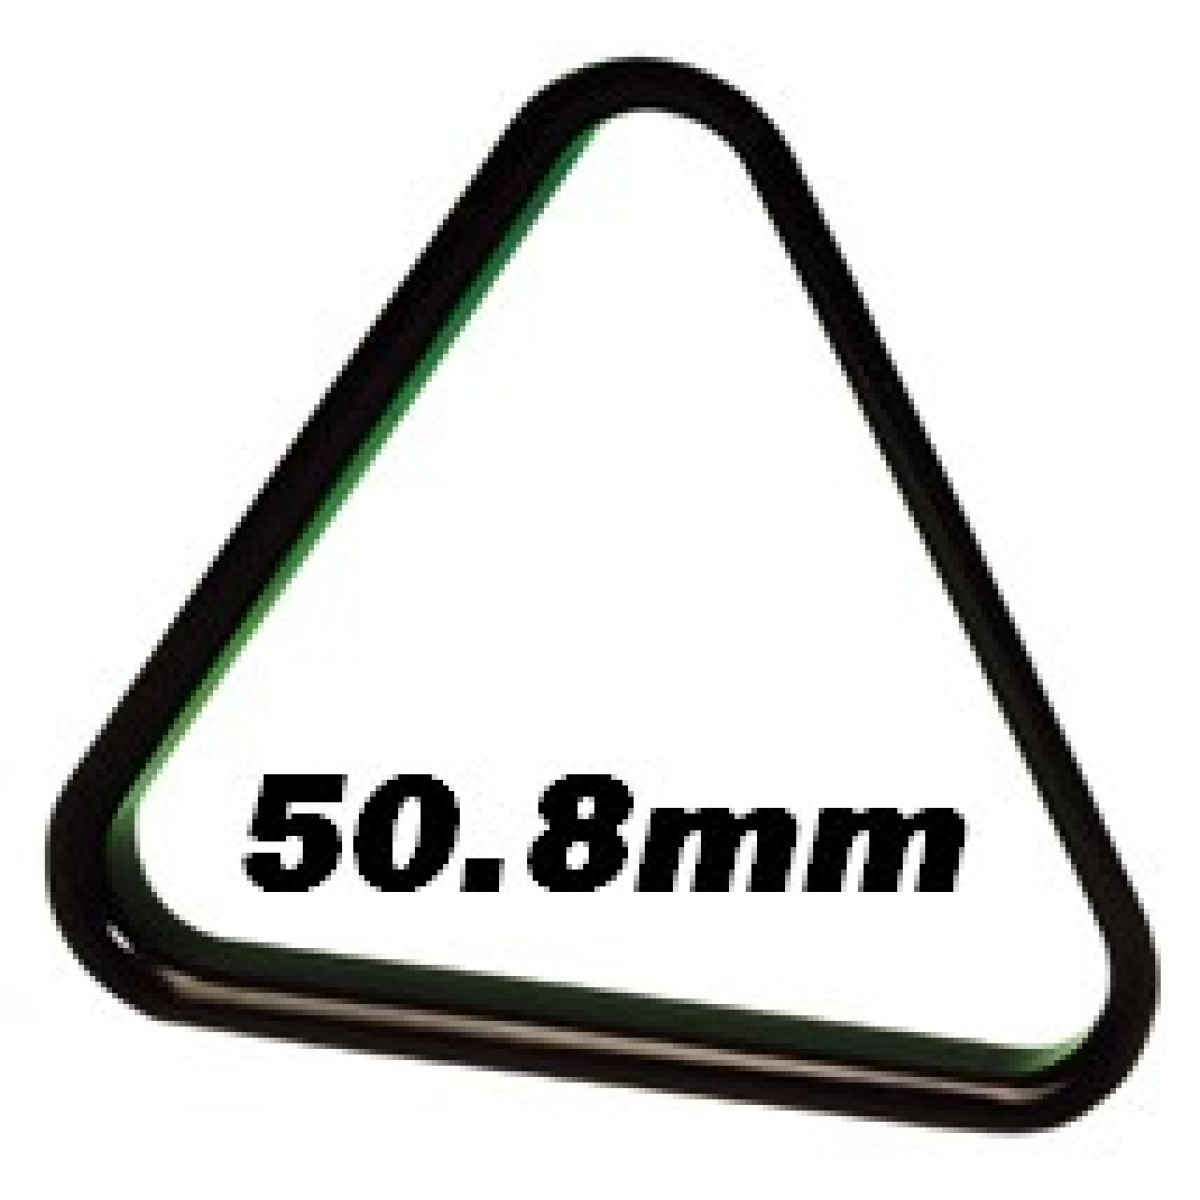 Triangle Ø57,2mm - plastique noir - JMC Billard